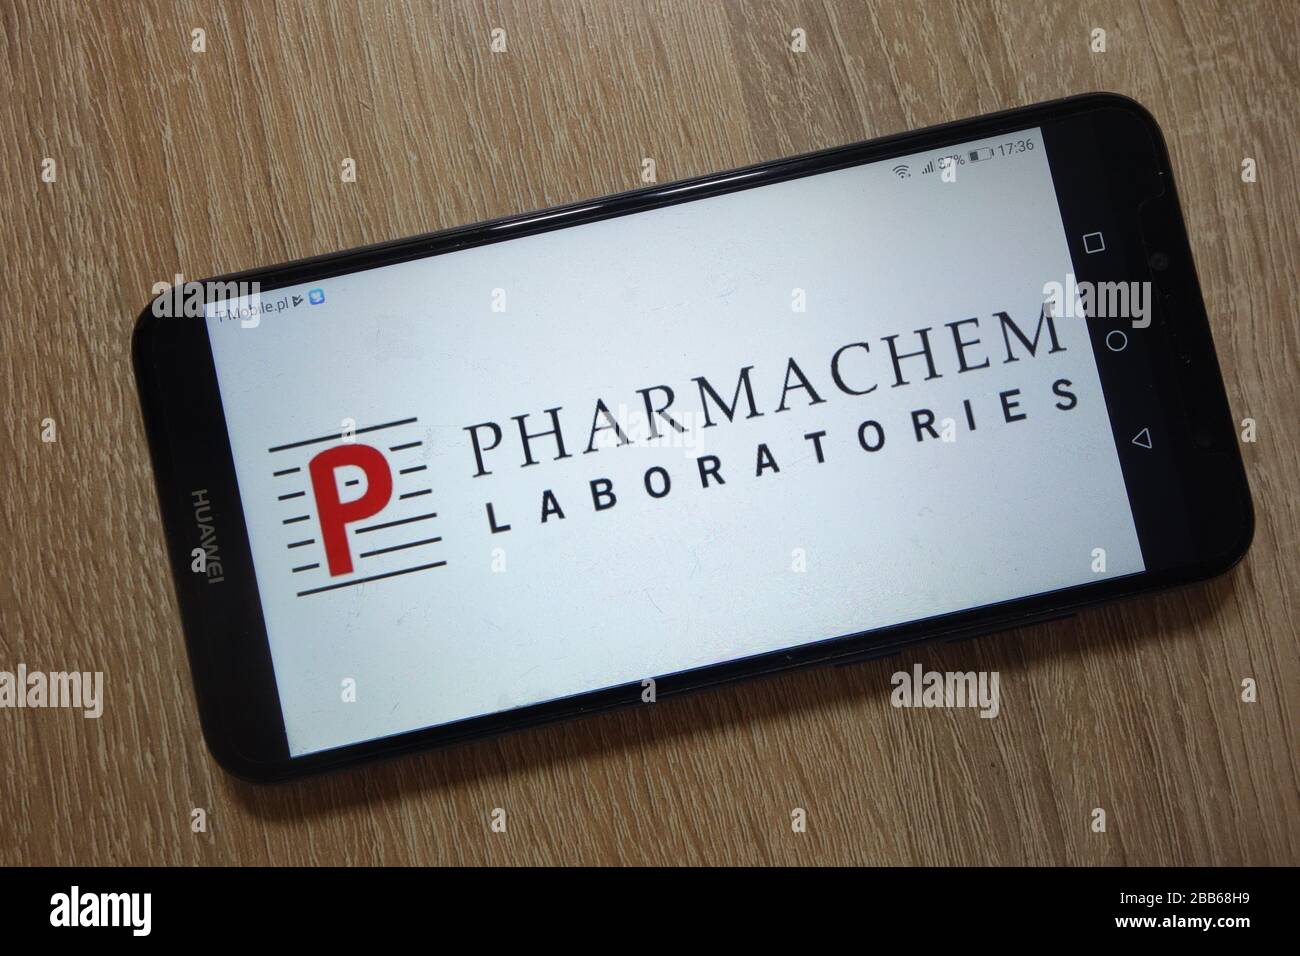 Pharmachem Laboratories logo displayed on smartphone Stock Photo